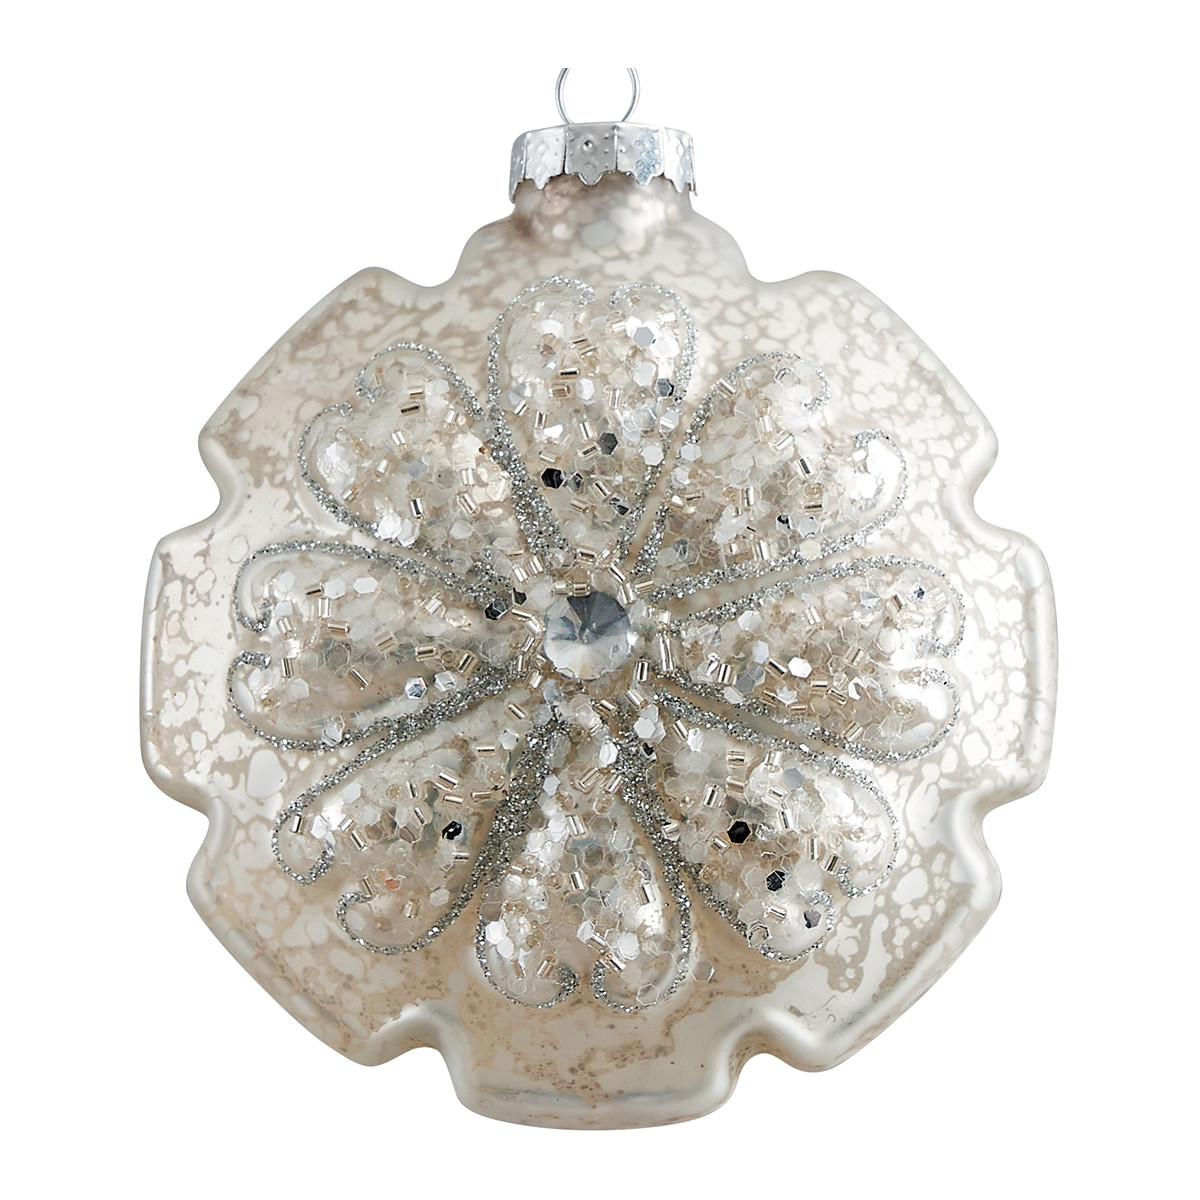 Adorno navideño flor cristal mercurizado – Modelo grande Navidad Mathilde M